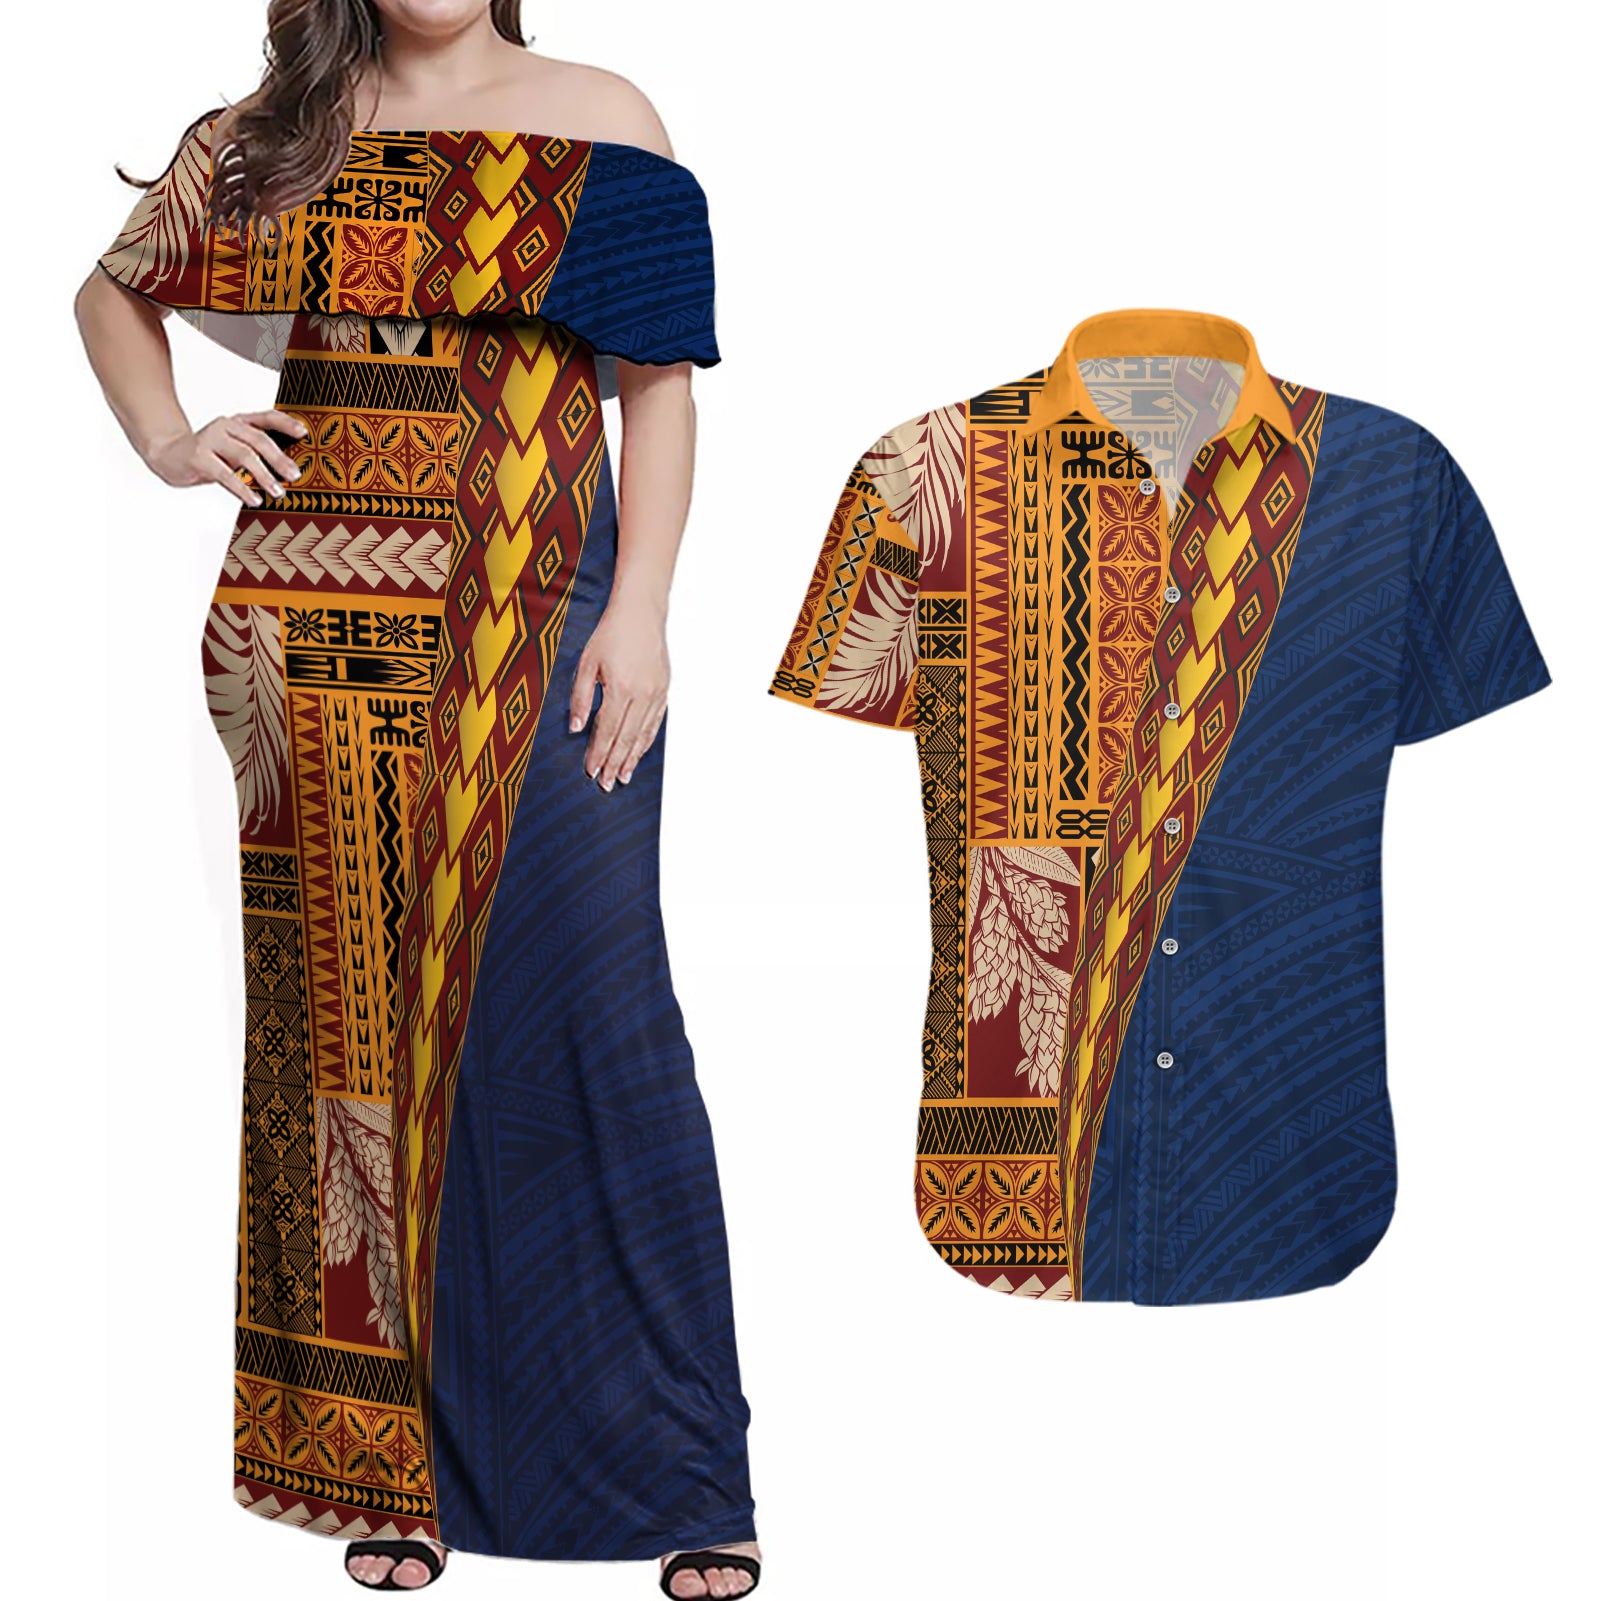 Samoa Siapo Motif Half Style Couples Matching Off Shoulder Maxi Dress and Hawaiian Shirt Colorful Version